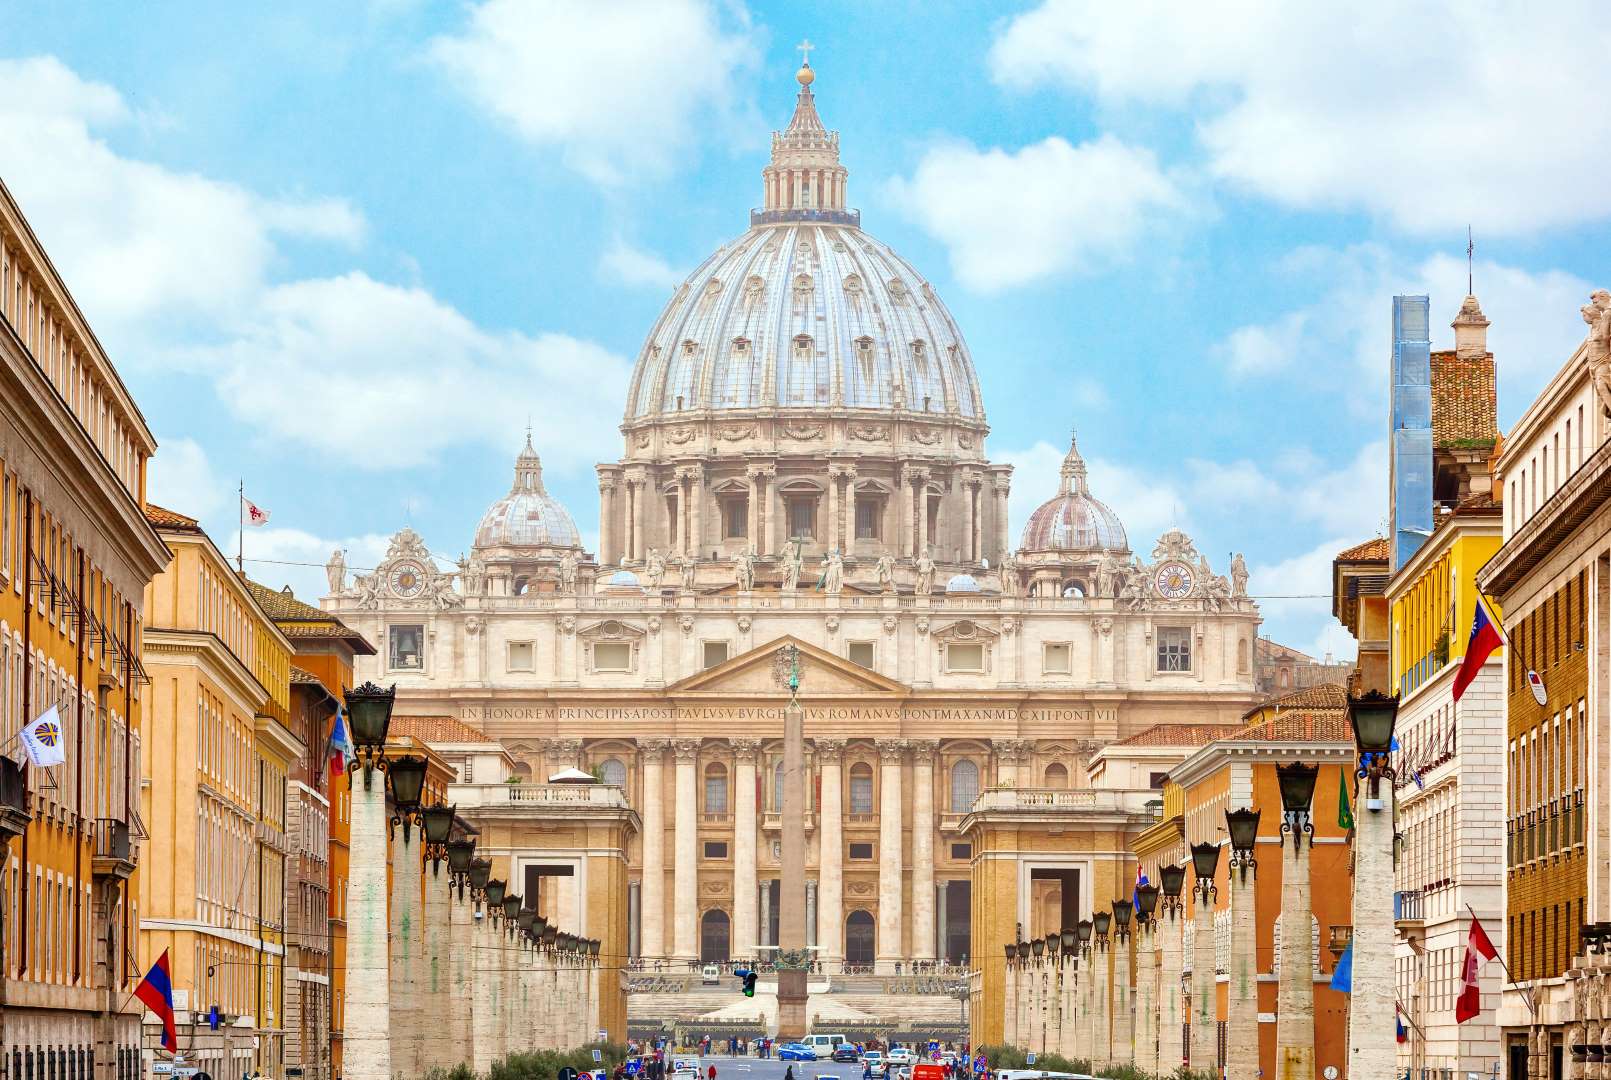 Capitals Of Europe Quiz St. Peter's Basilica in Vatican City